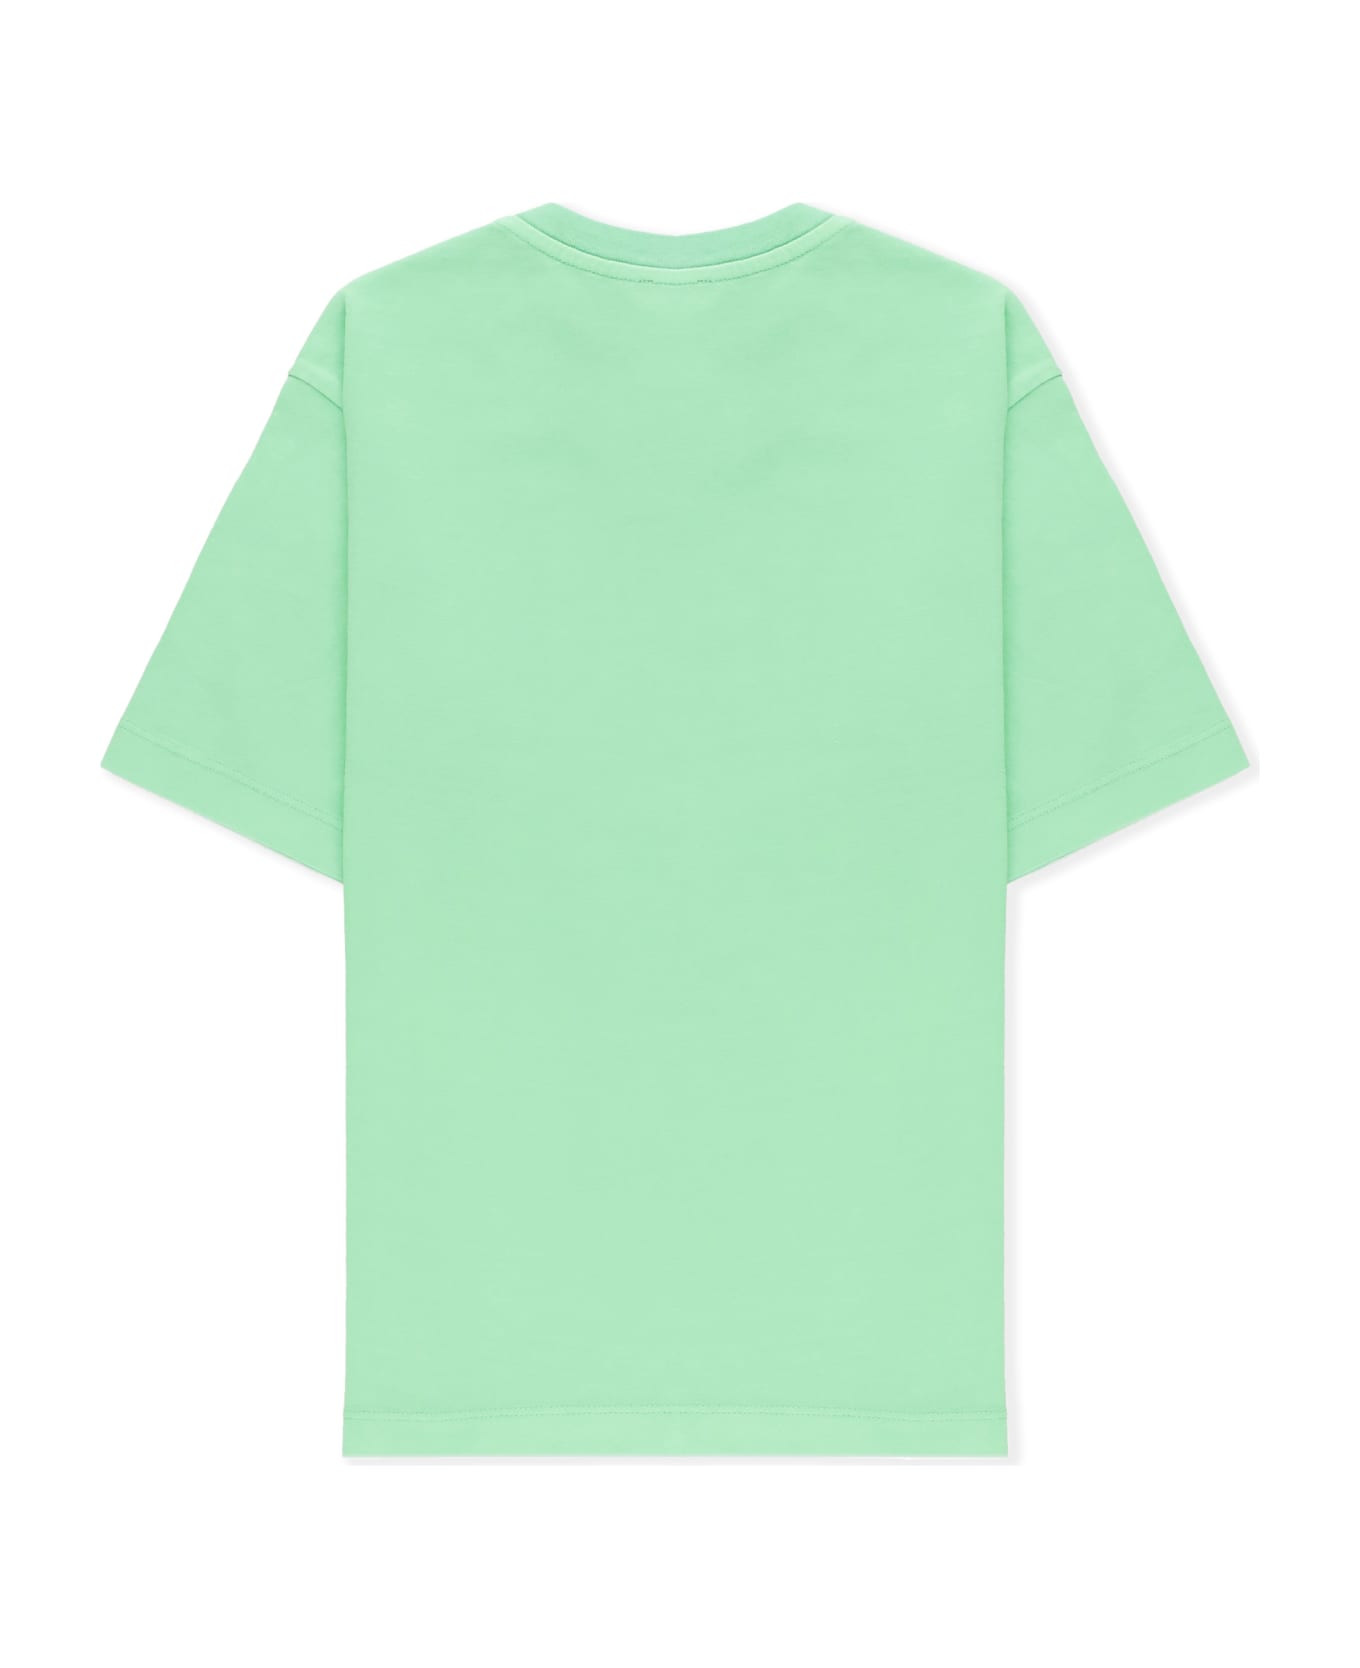 Diesel Tnuci T-shirt - Green